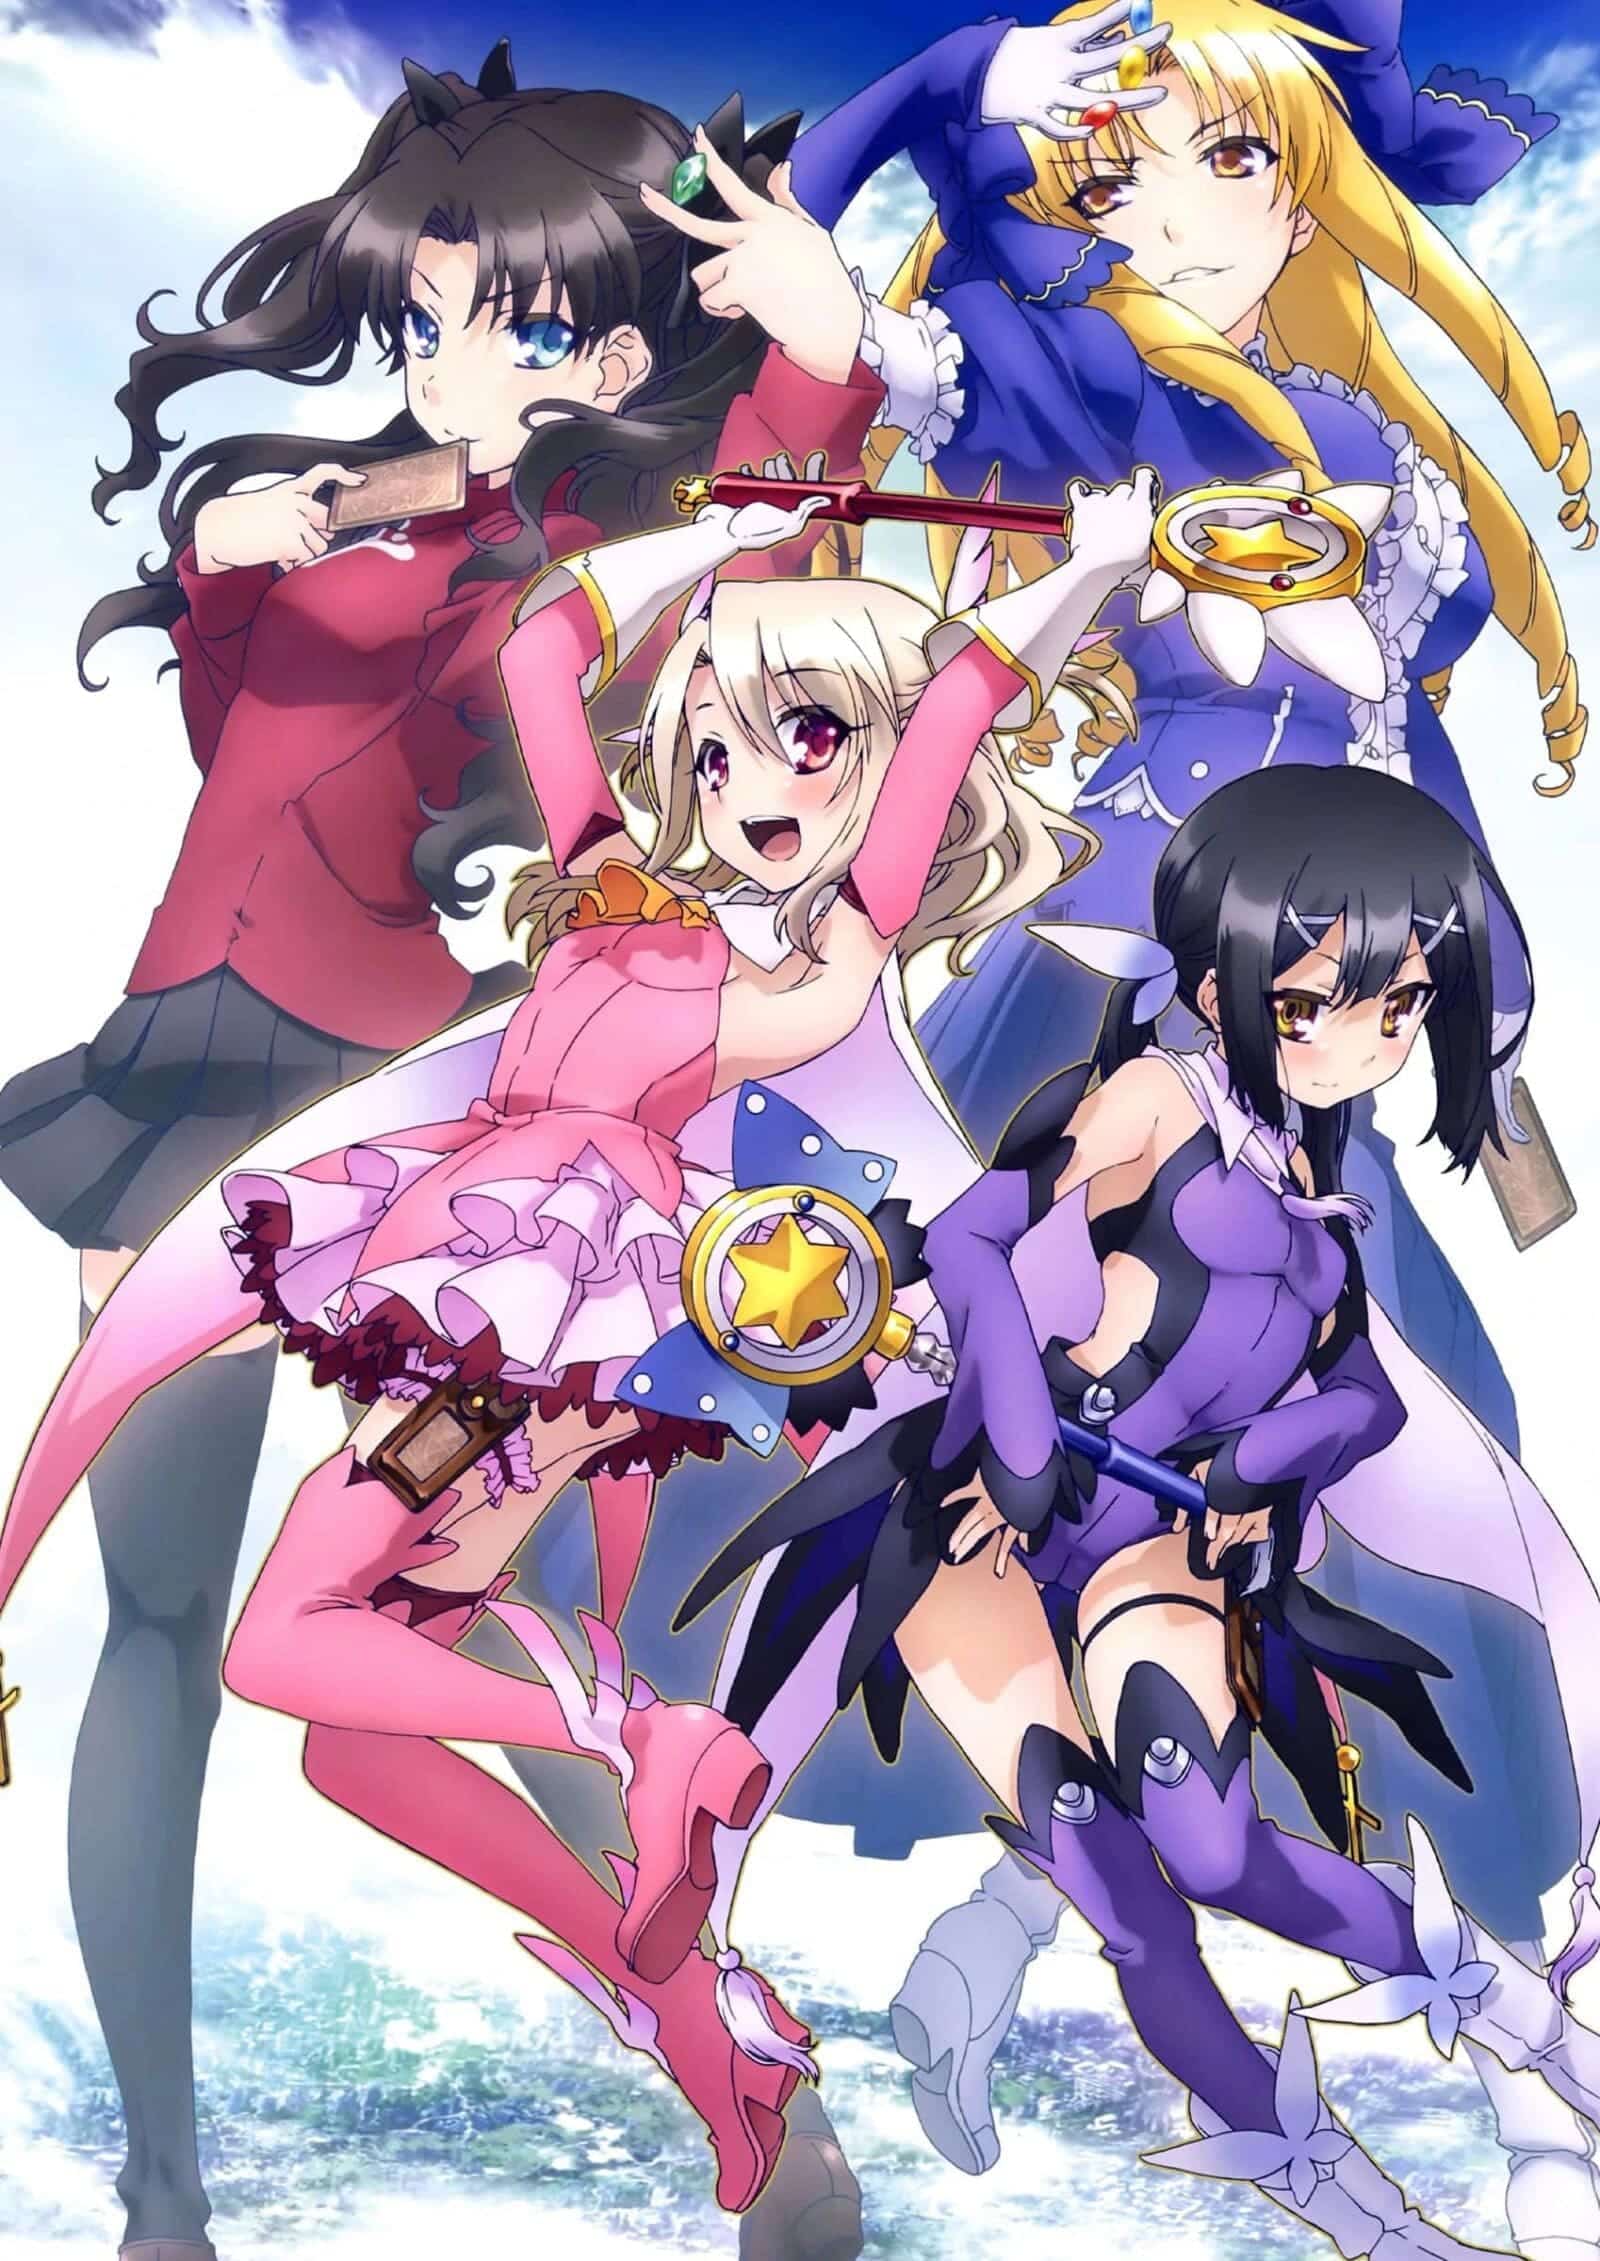 Fate kaleid liner Prisma Illya anime1 1600x2261 1 1 1